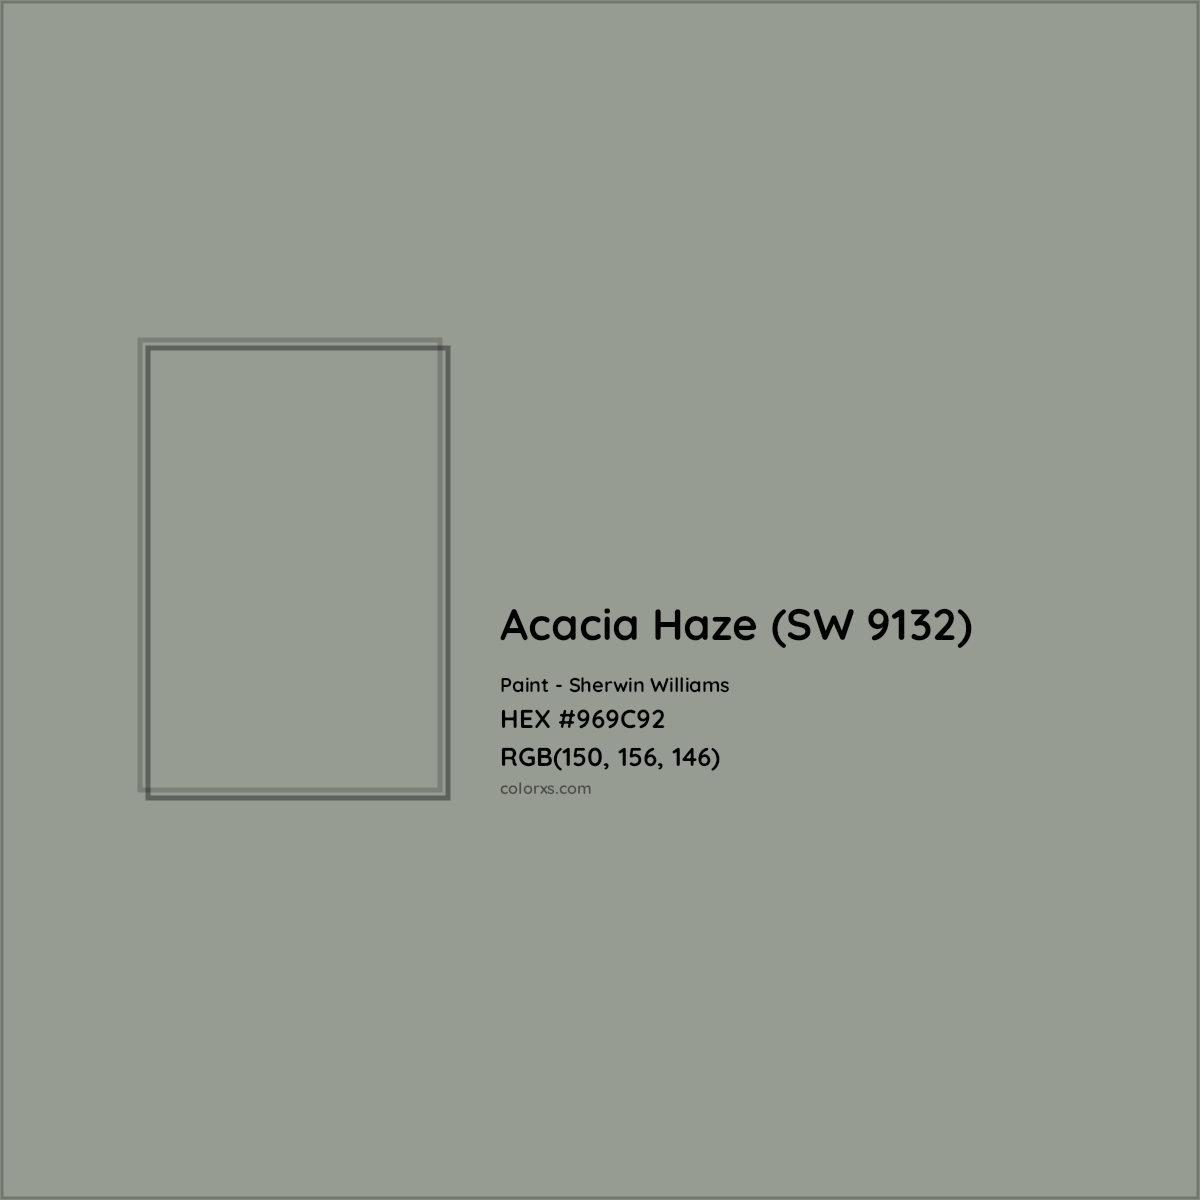 HEX #969C92 Acacia Haze (SW 9132) Paint Sherwin Williams - Color Code